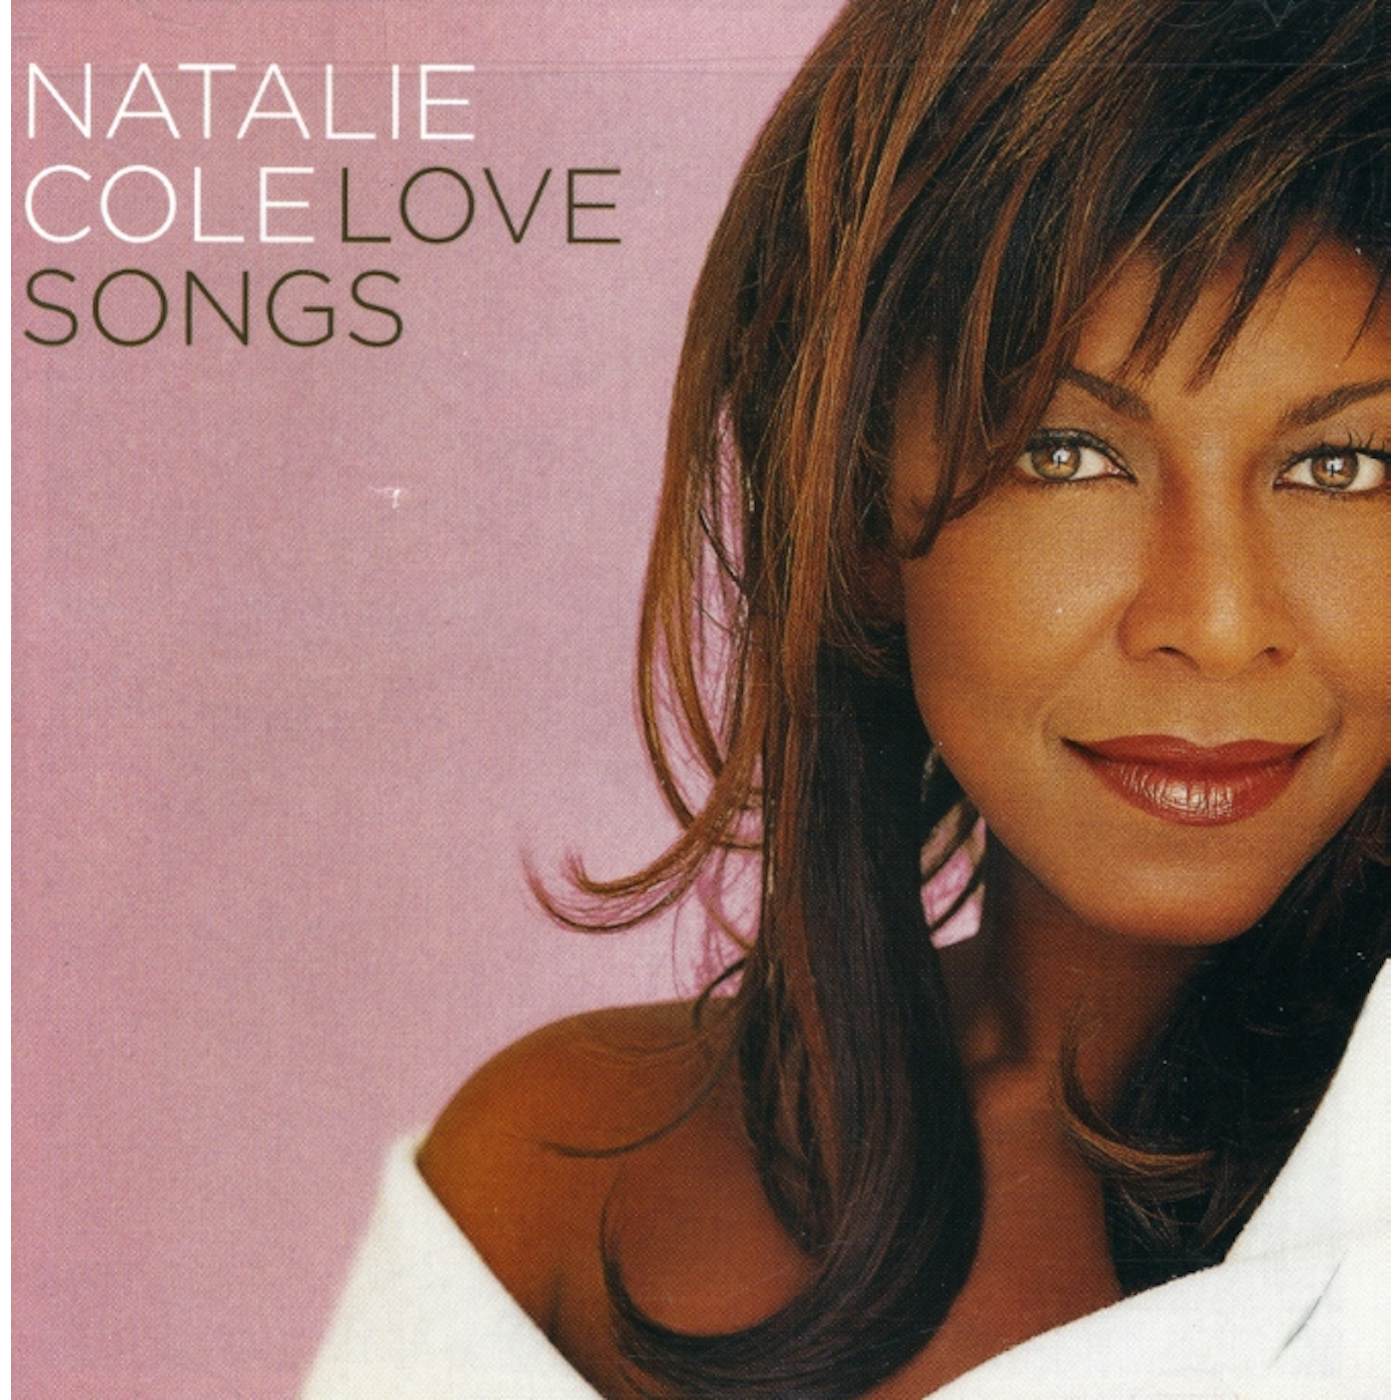 Natalie Cole LOVE SONGS CD